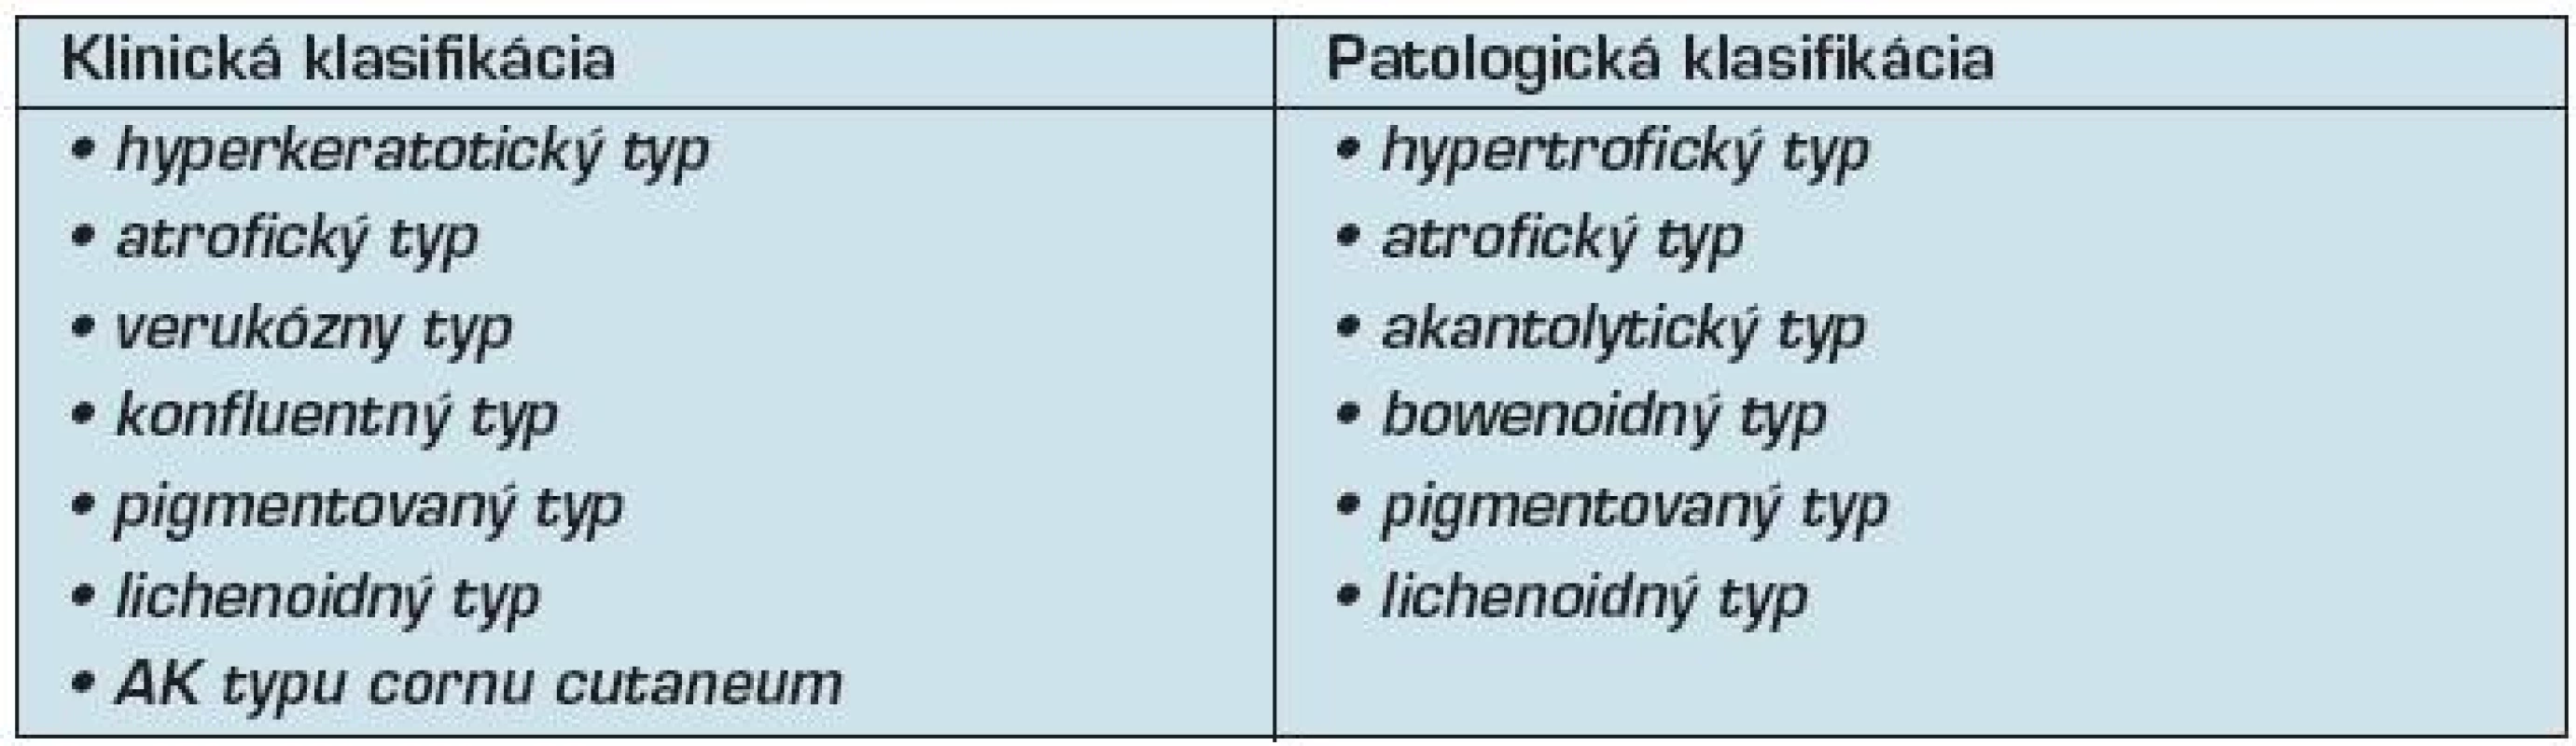 Klinická a patologická klasifikácia aktinickej keratózy (5, 17)